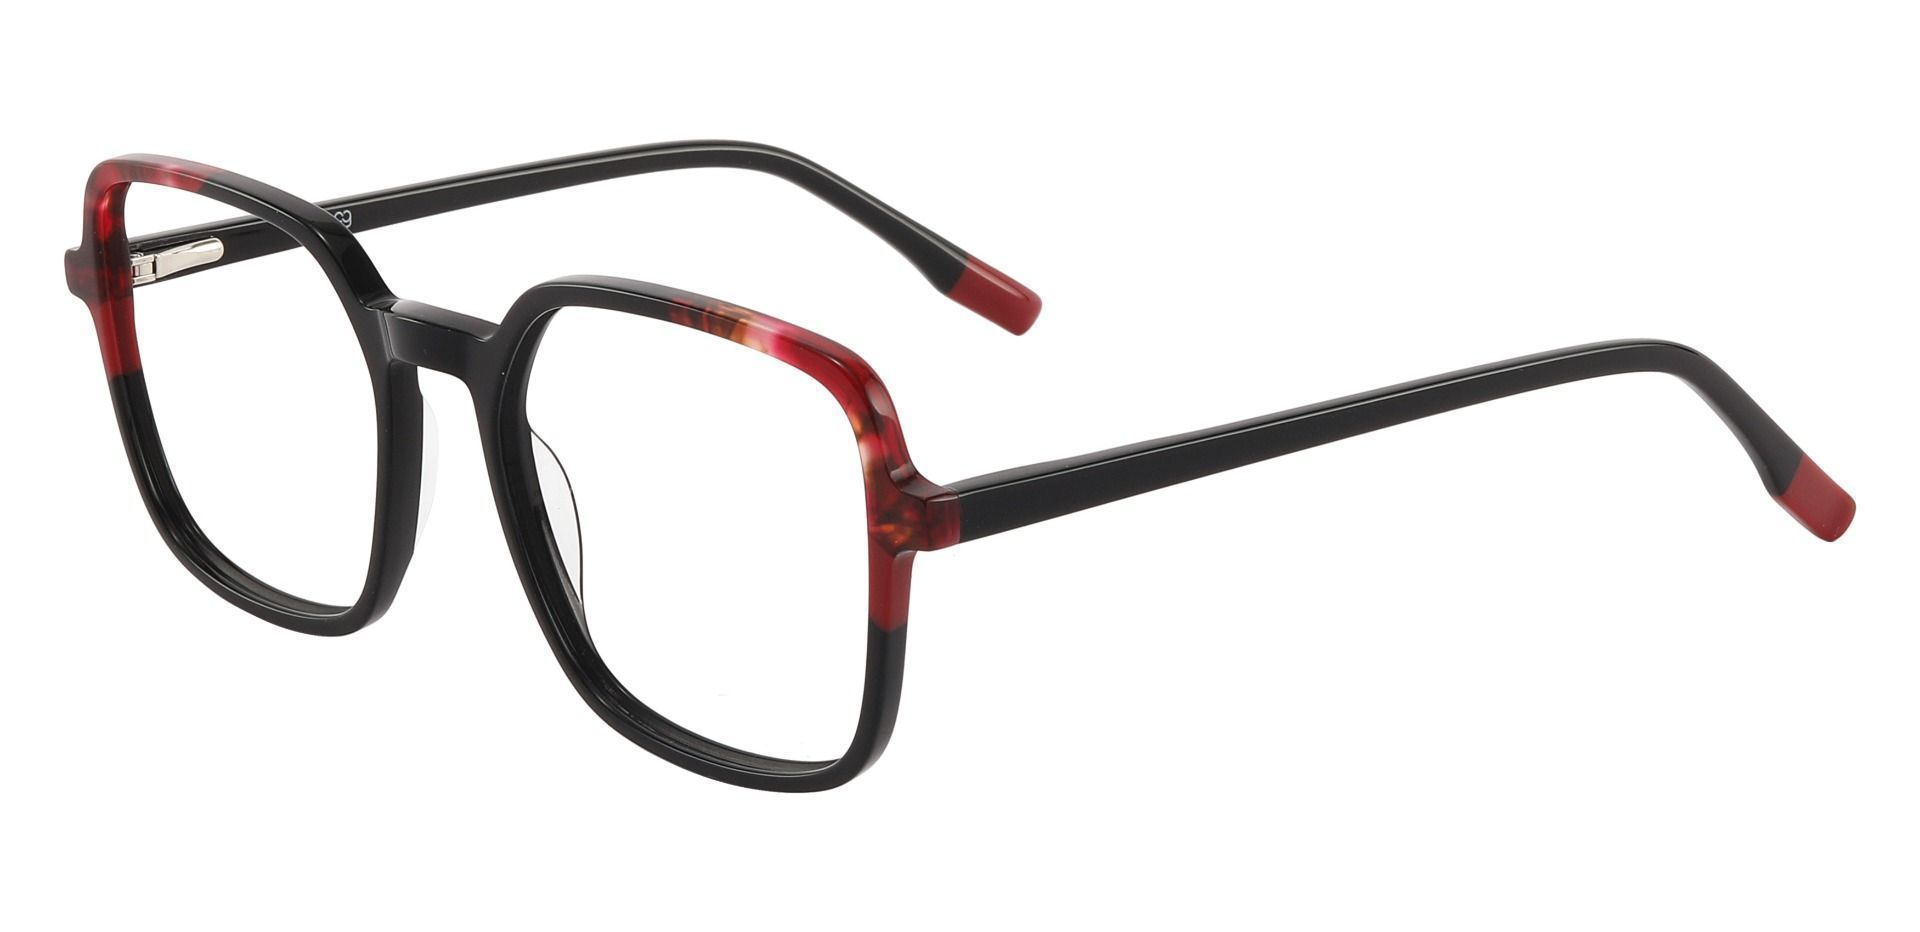 Medford Square Lined Bifocal Glasses - Black